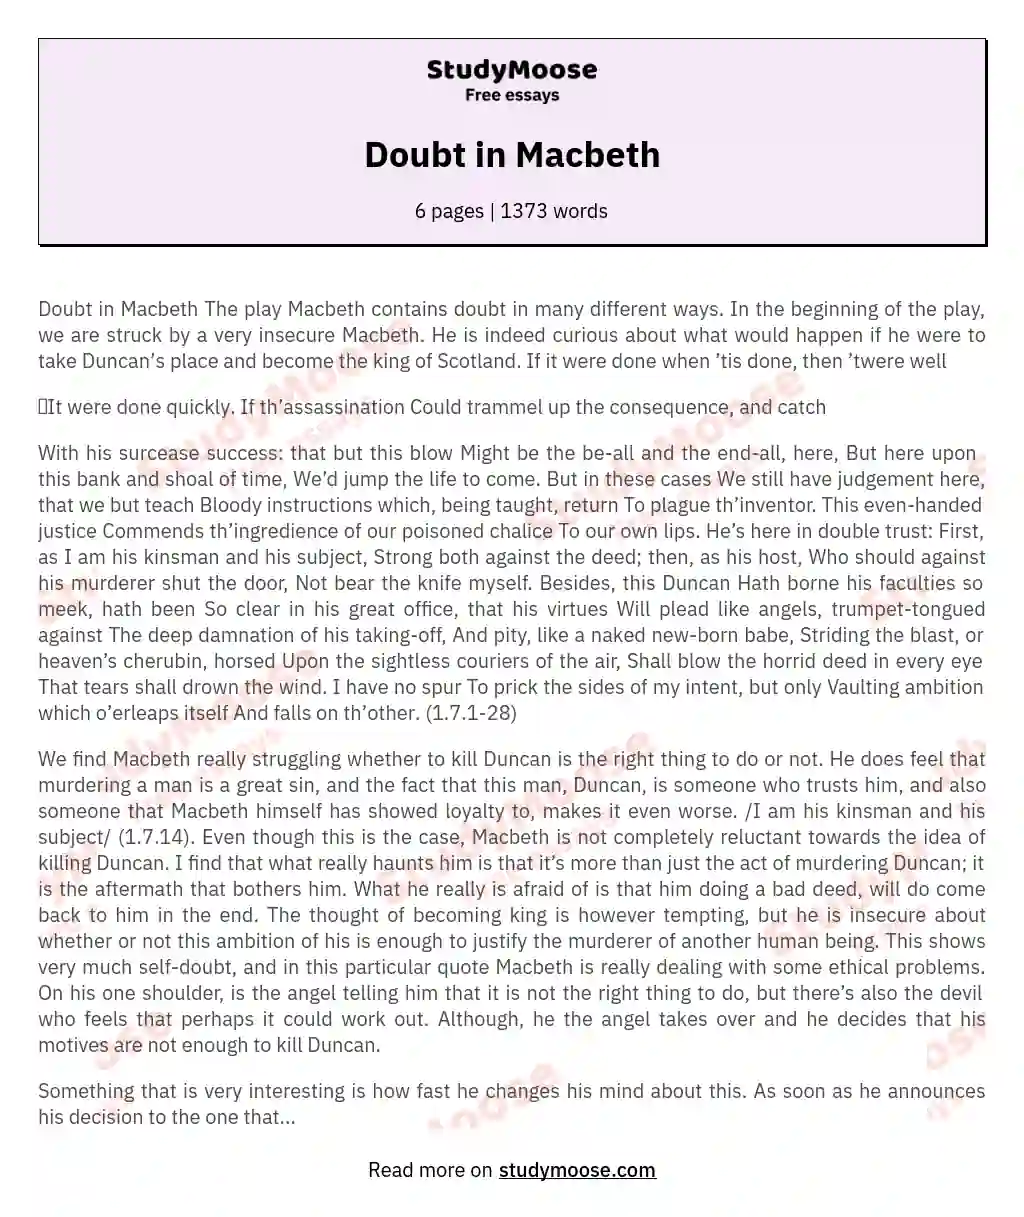 Doubt in Macbeth essay